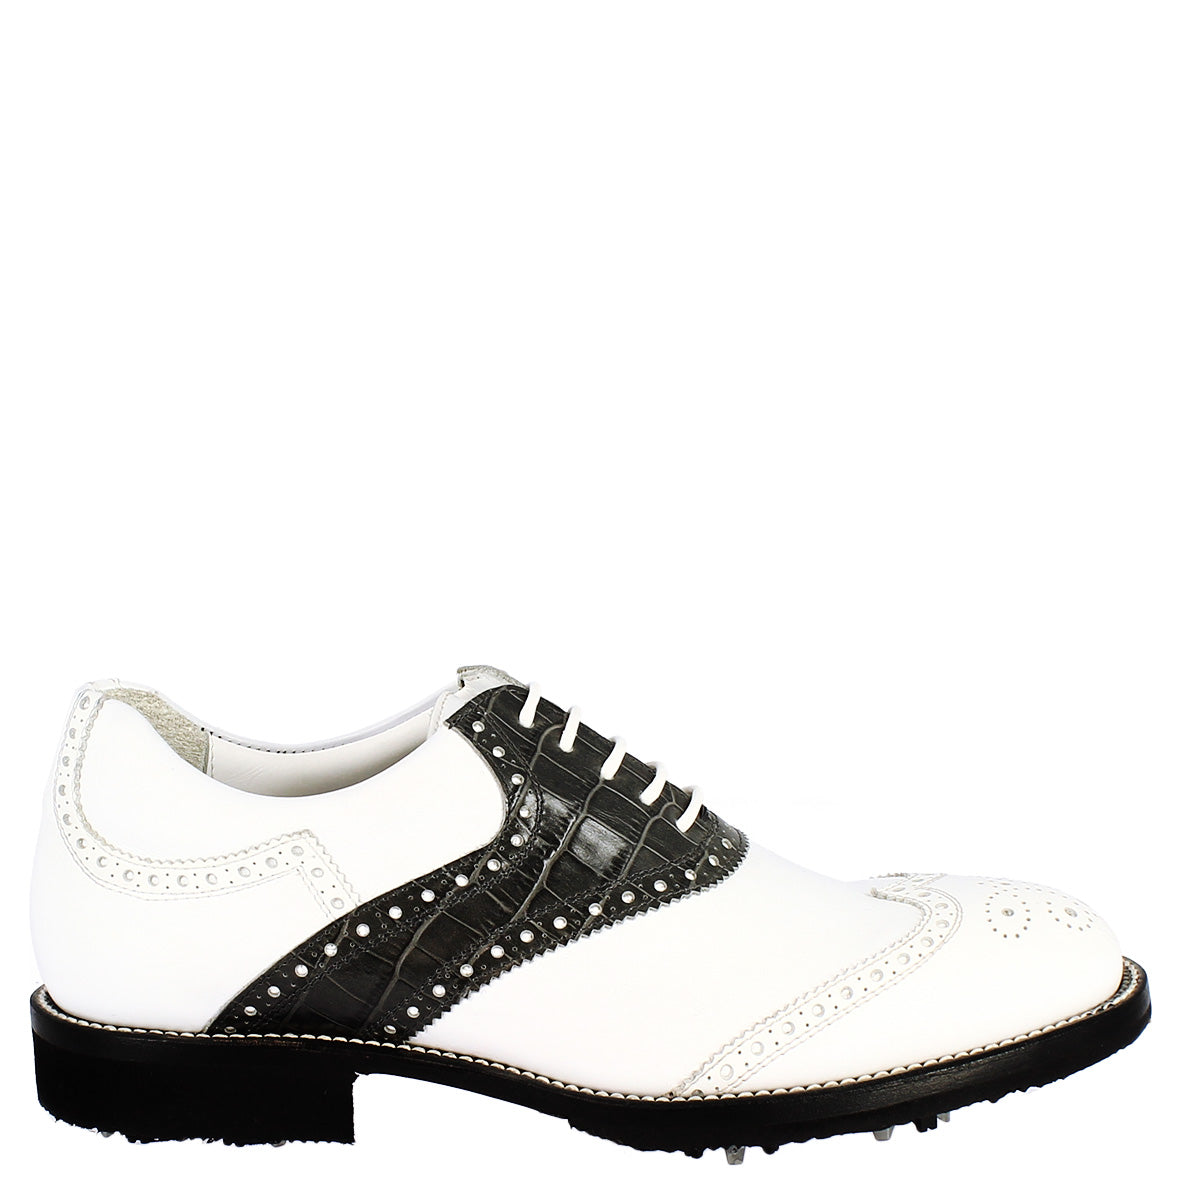 Handmade women's golf shoes in black and white full-grain leather